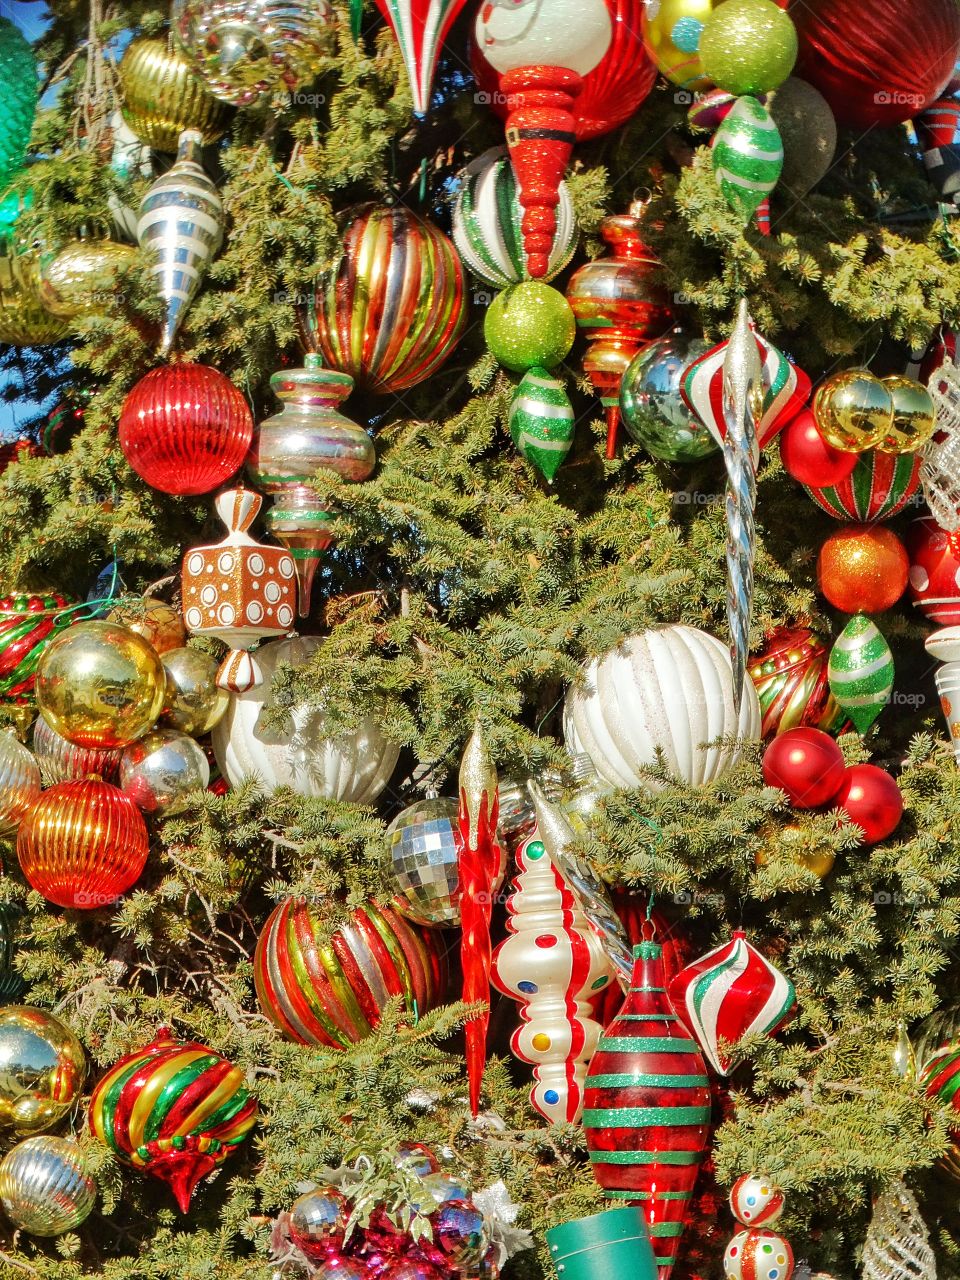 Festive Christmas Tree
